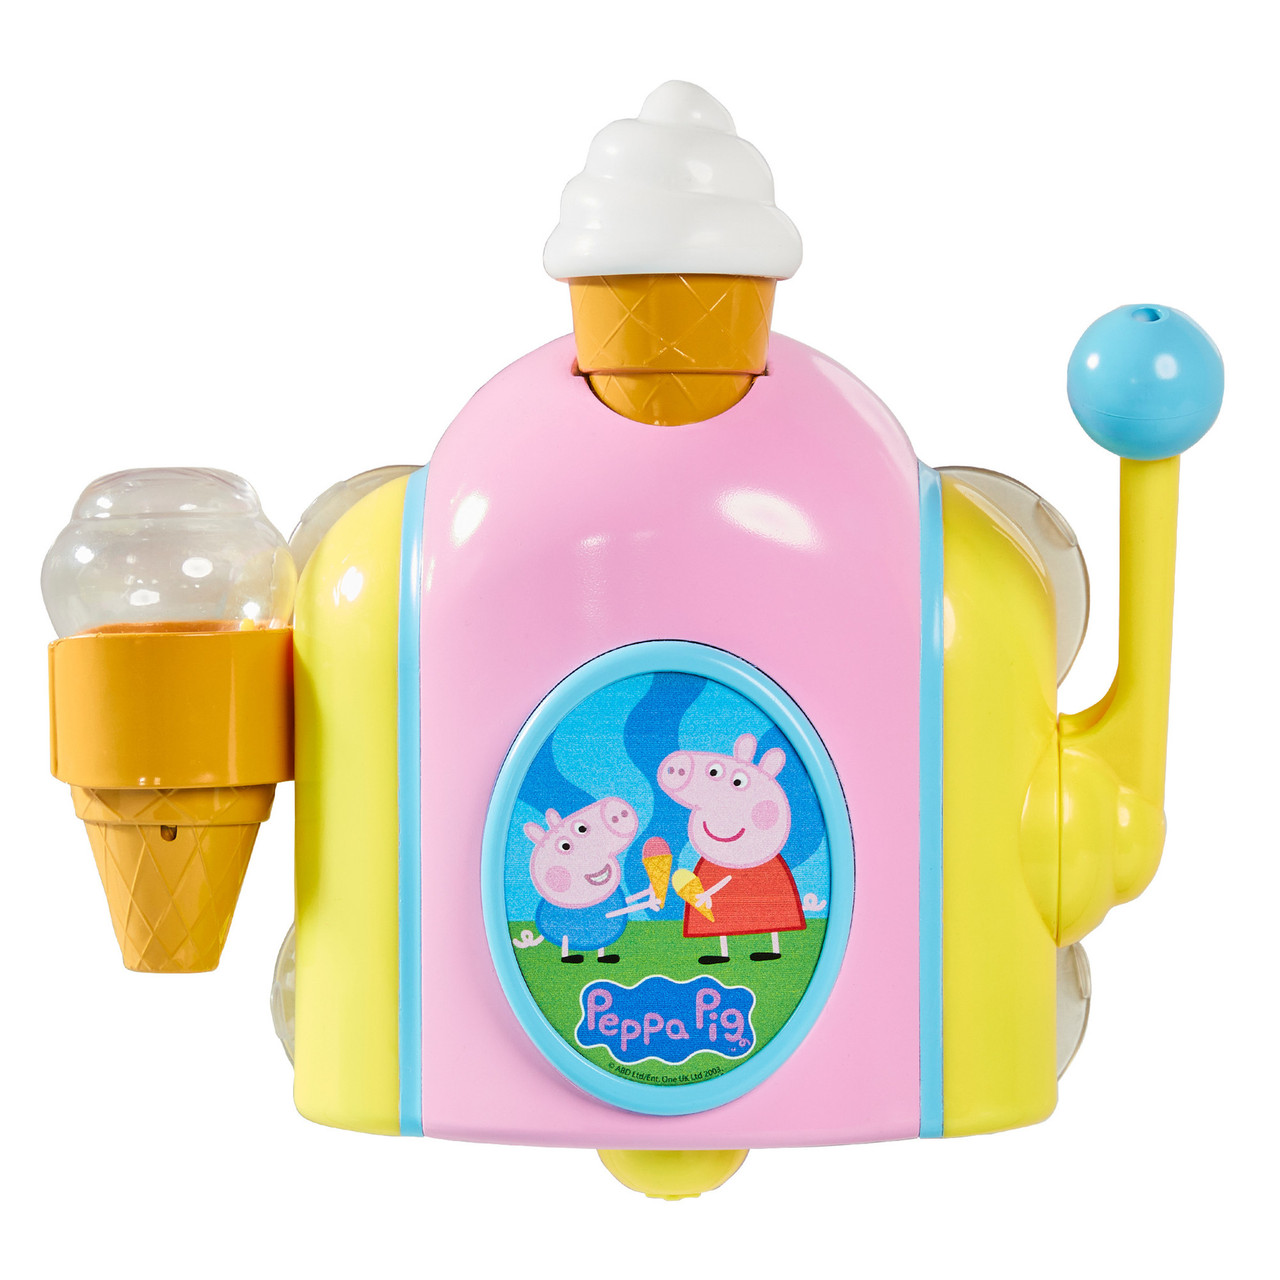 Toomies Peppa Pig Bubble Ice Cream Maker Bath Toy